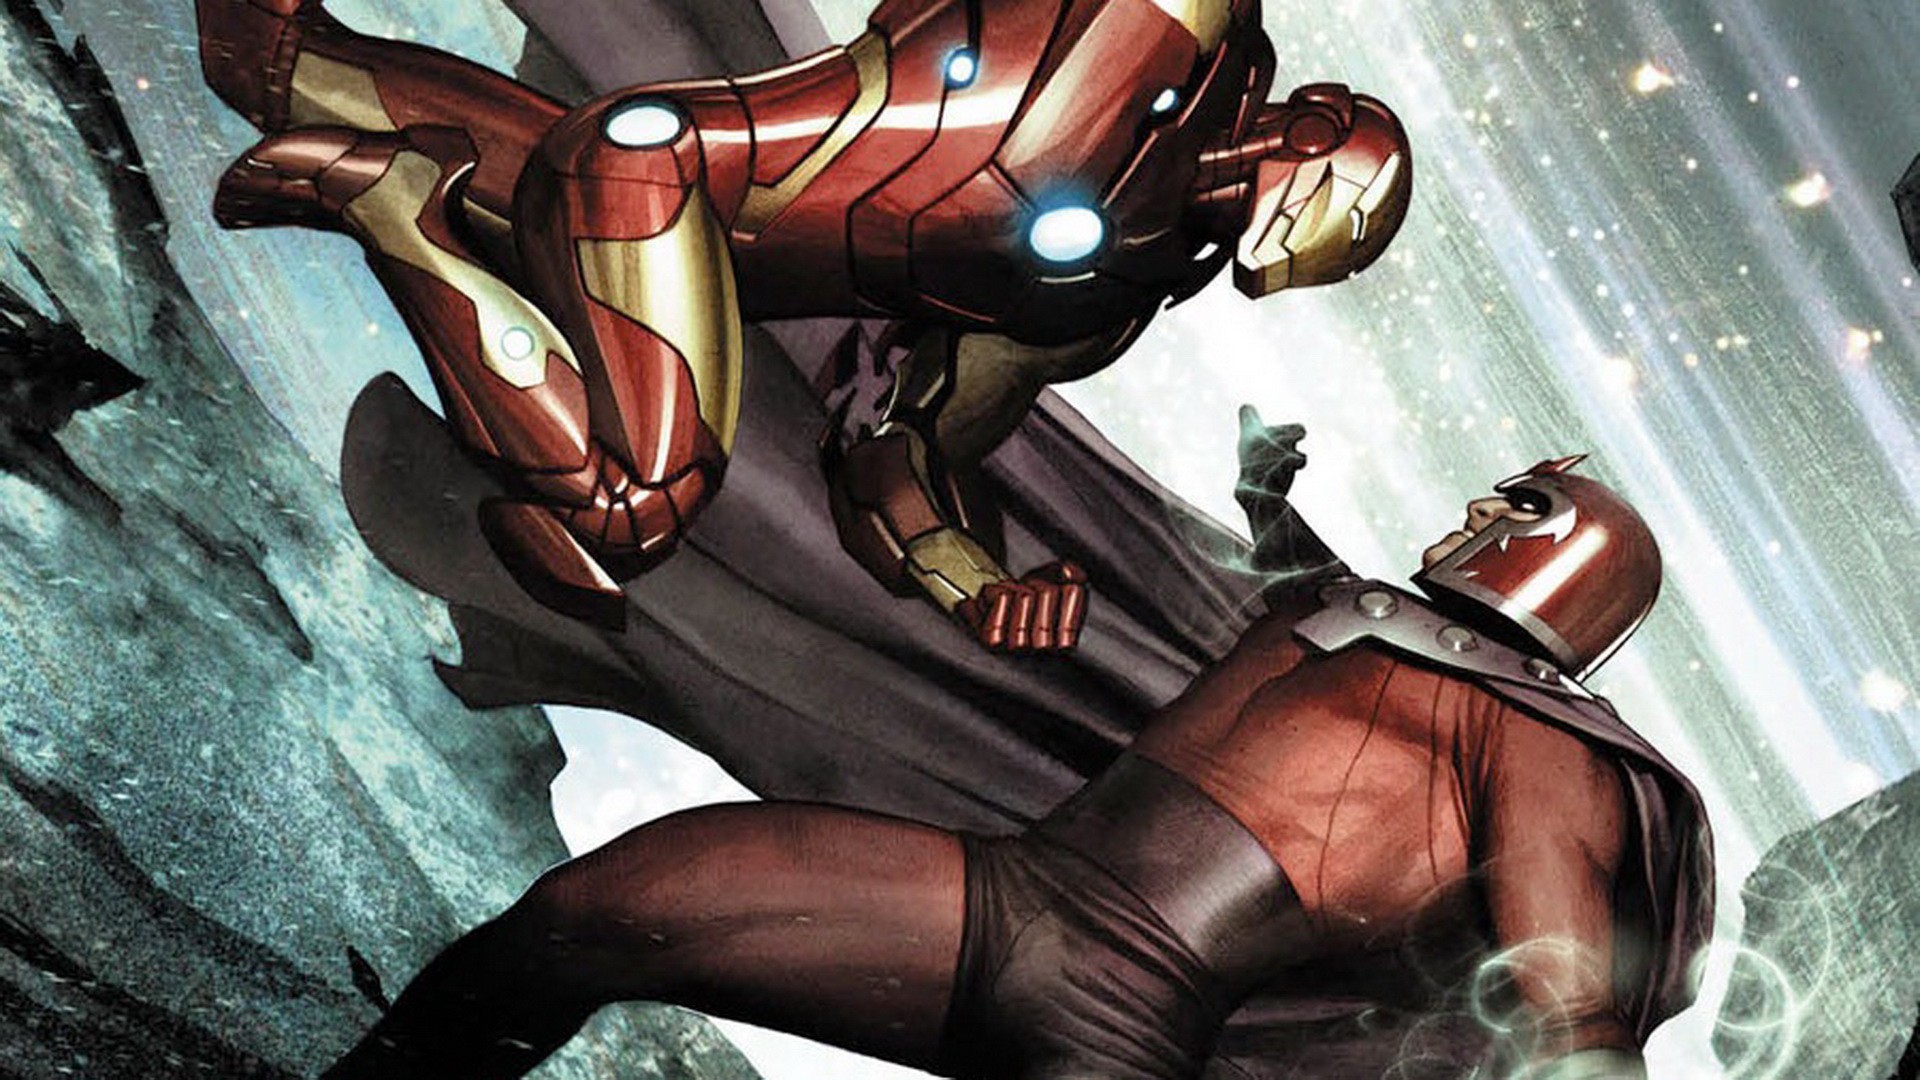 Video Game Iron Man HD Wallpaper Background Image. 